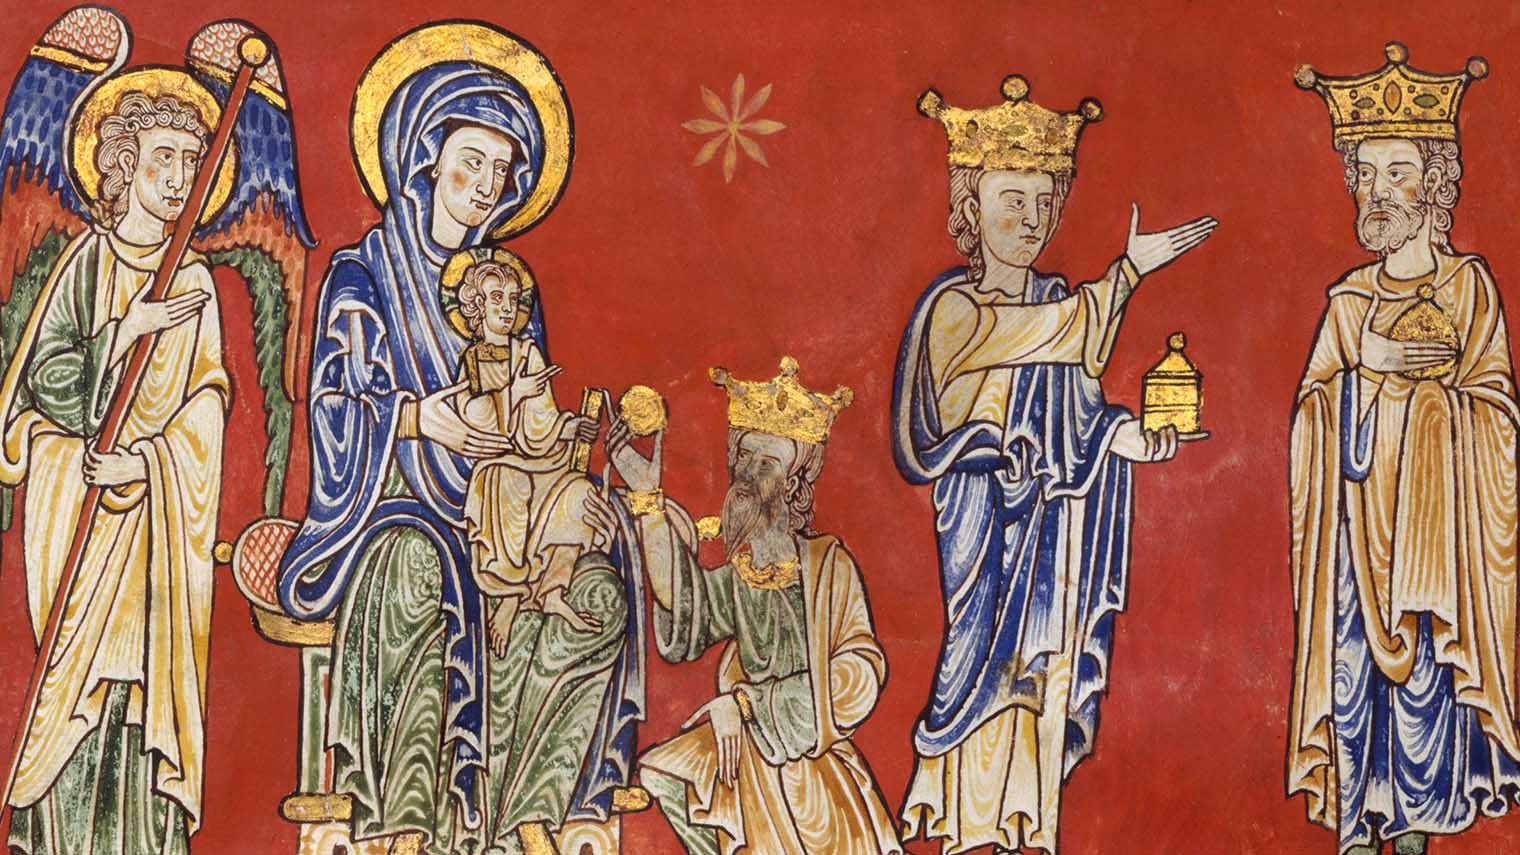 famous medieval paintings of kings